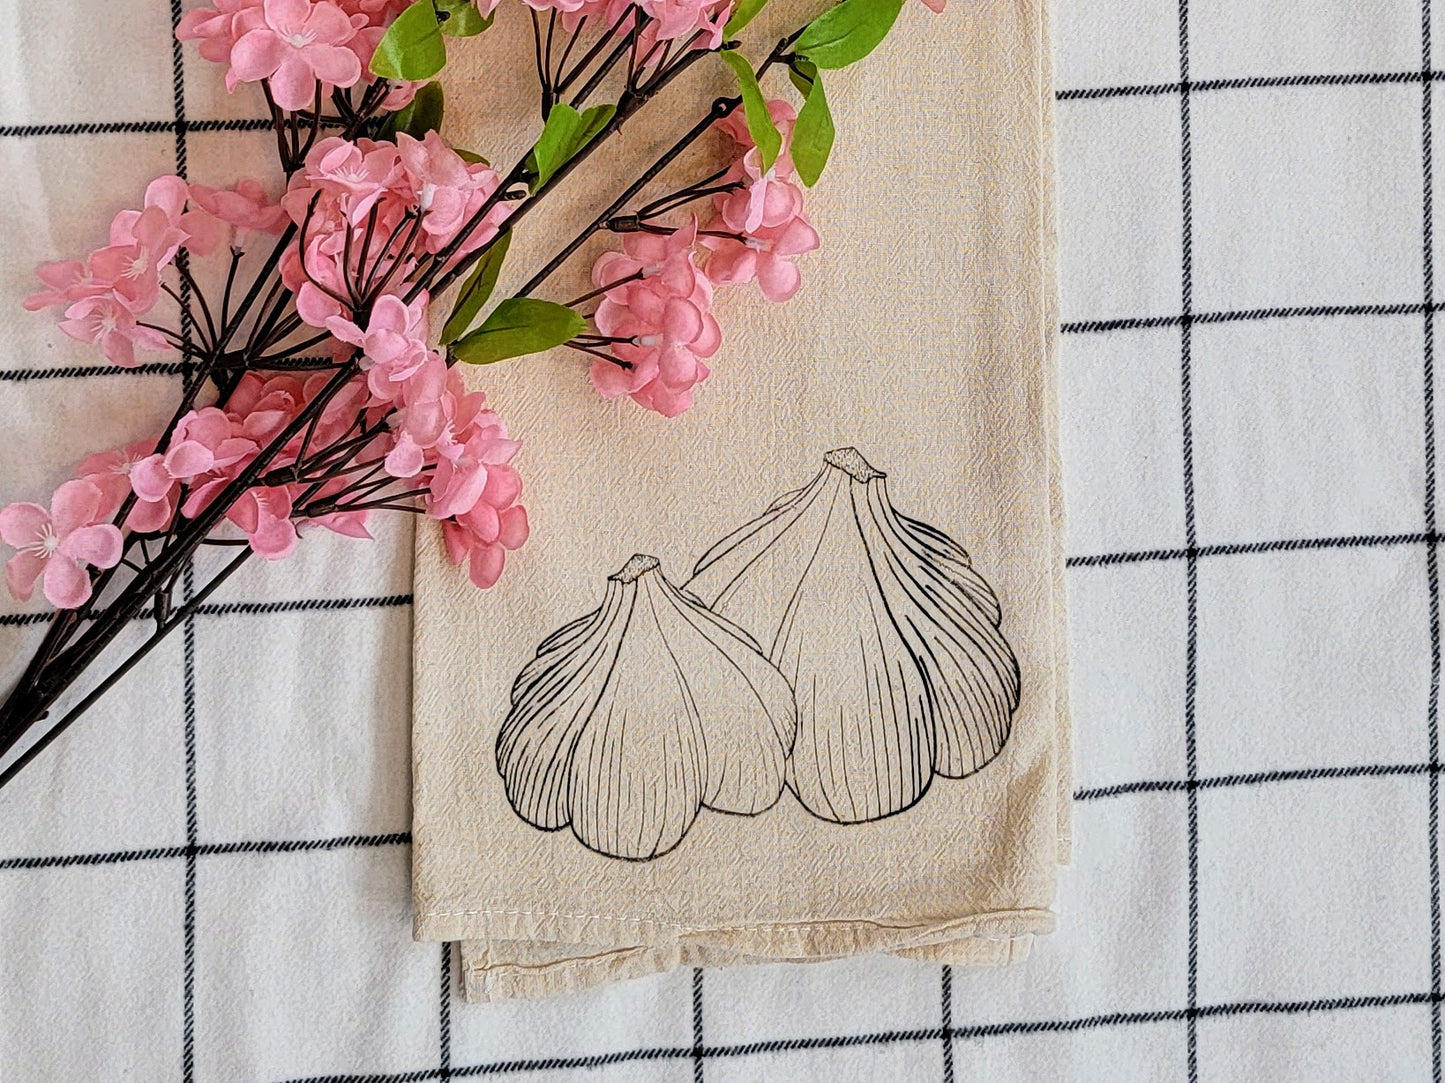 Garlic Screen Printed Tea Towel - Landscape Close Up Shot